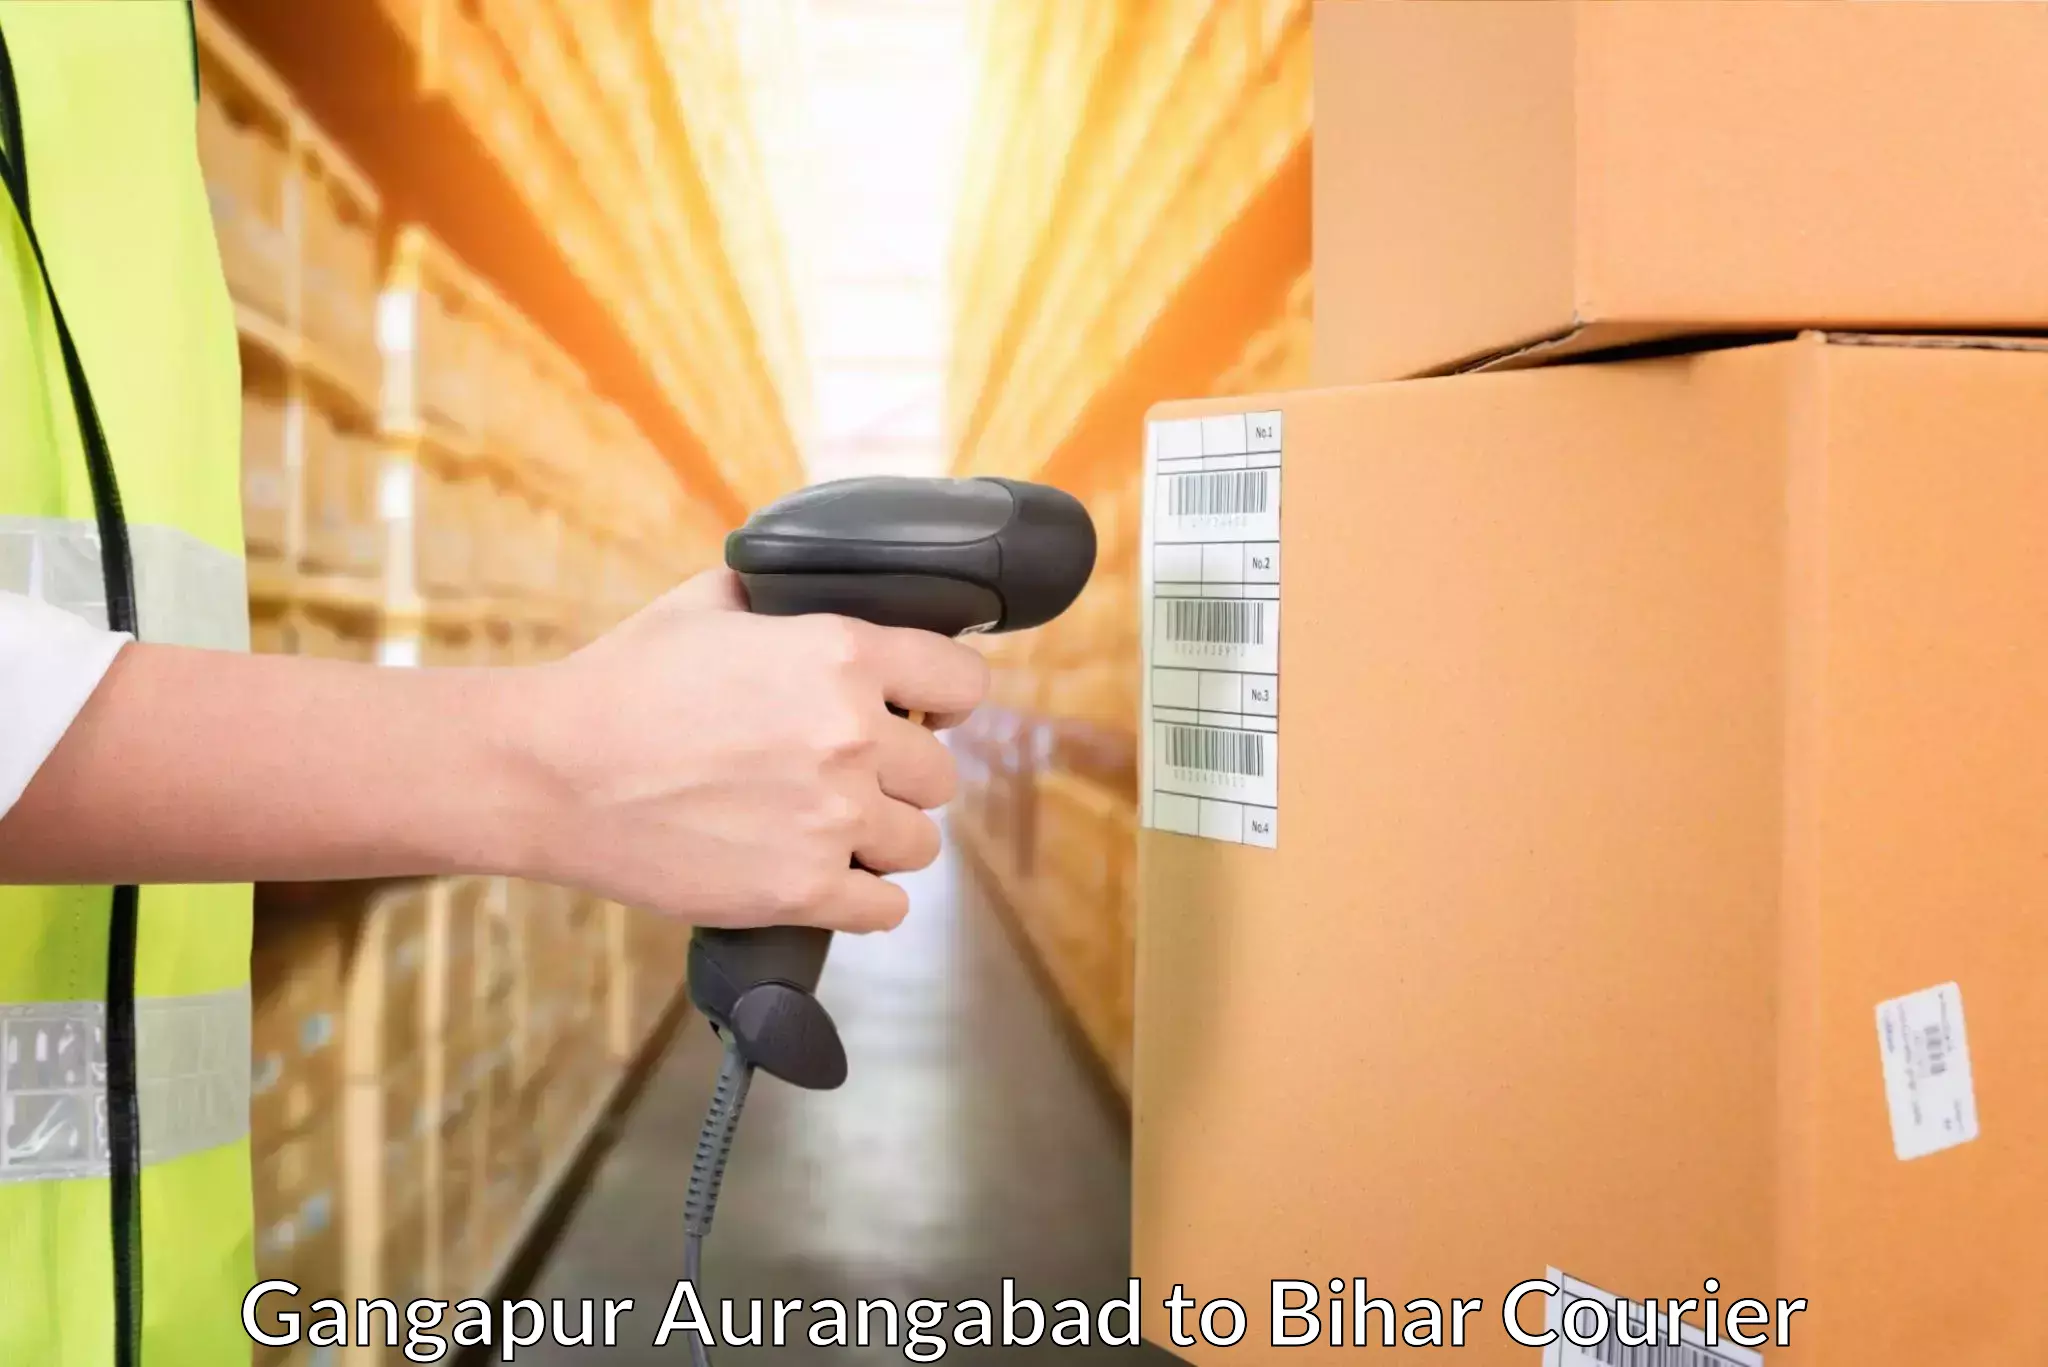 International courier networks Gangapur Aurangabad to Malmaliya